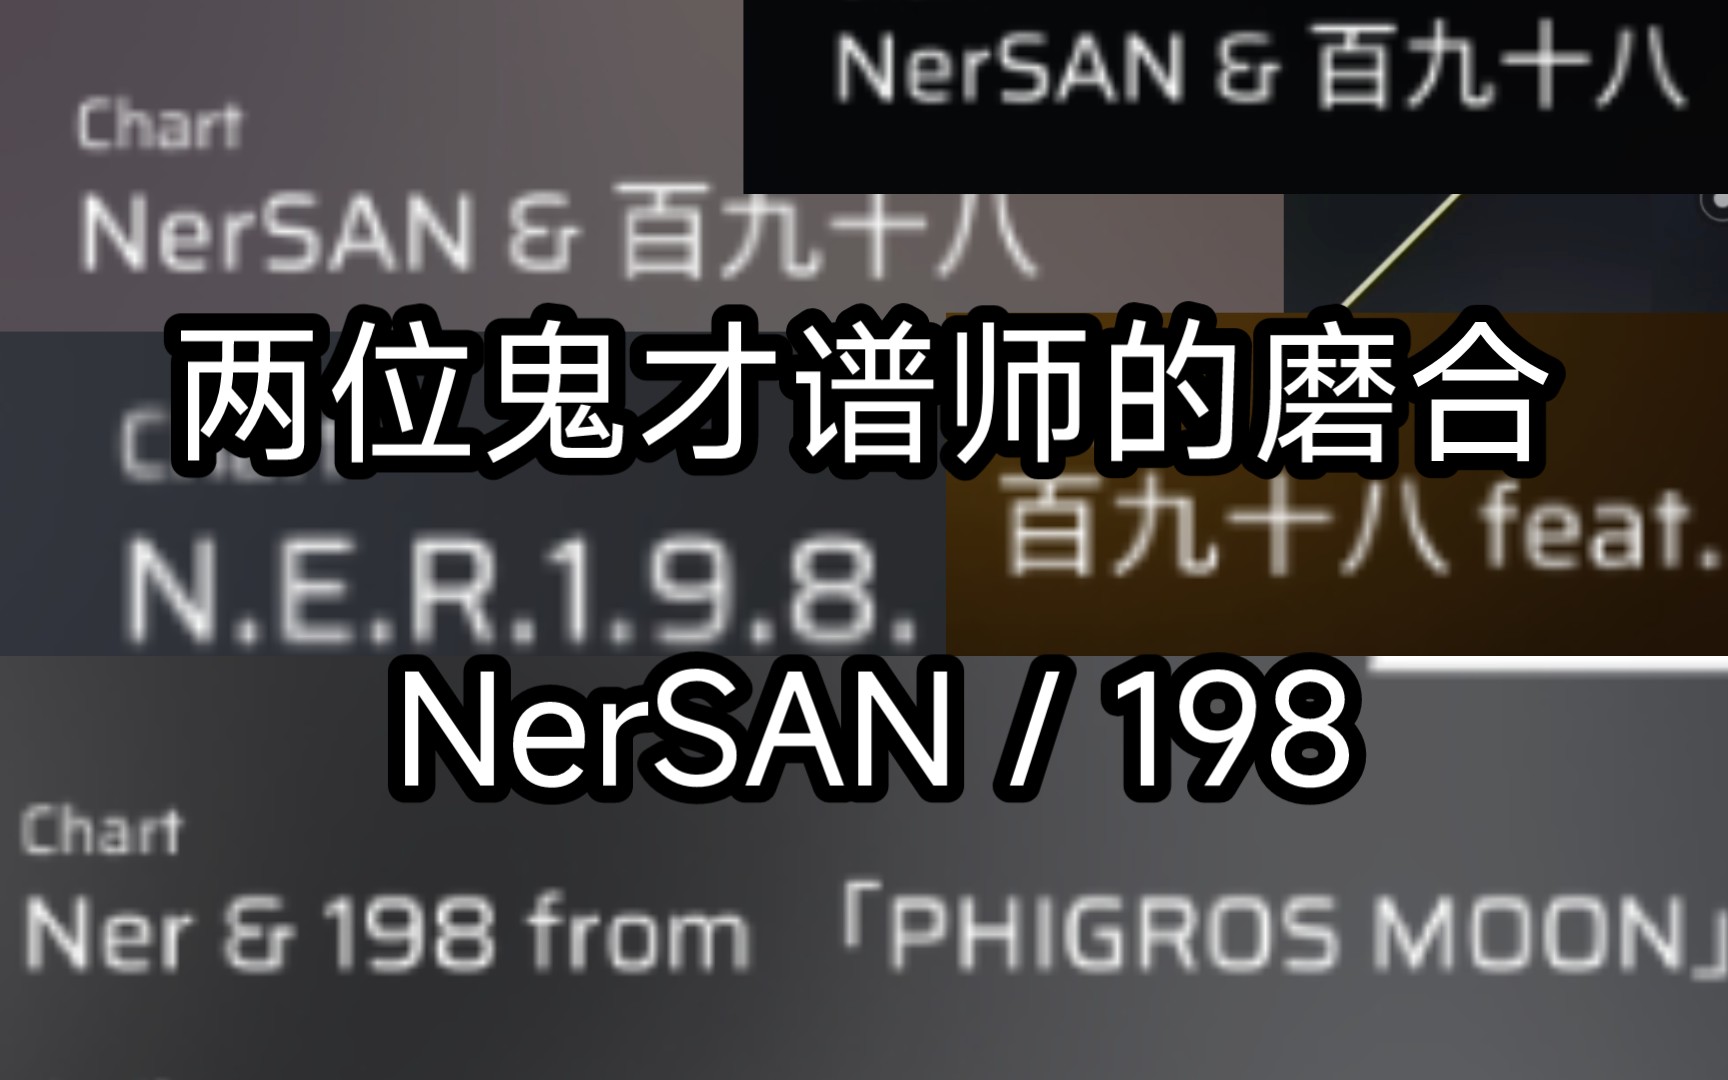 [Phigros]盘点NerSAN与百九十八的合作谱